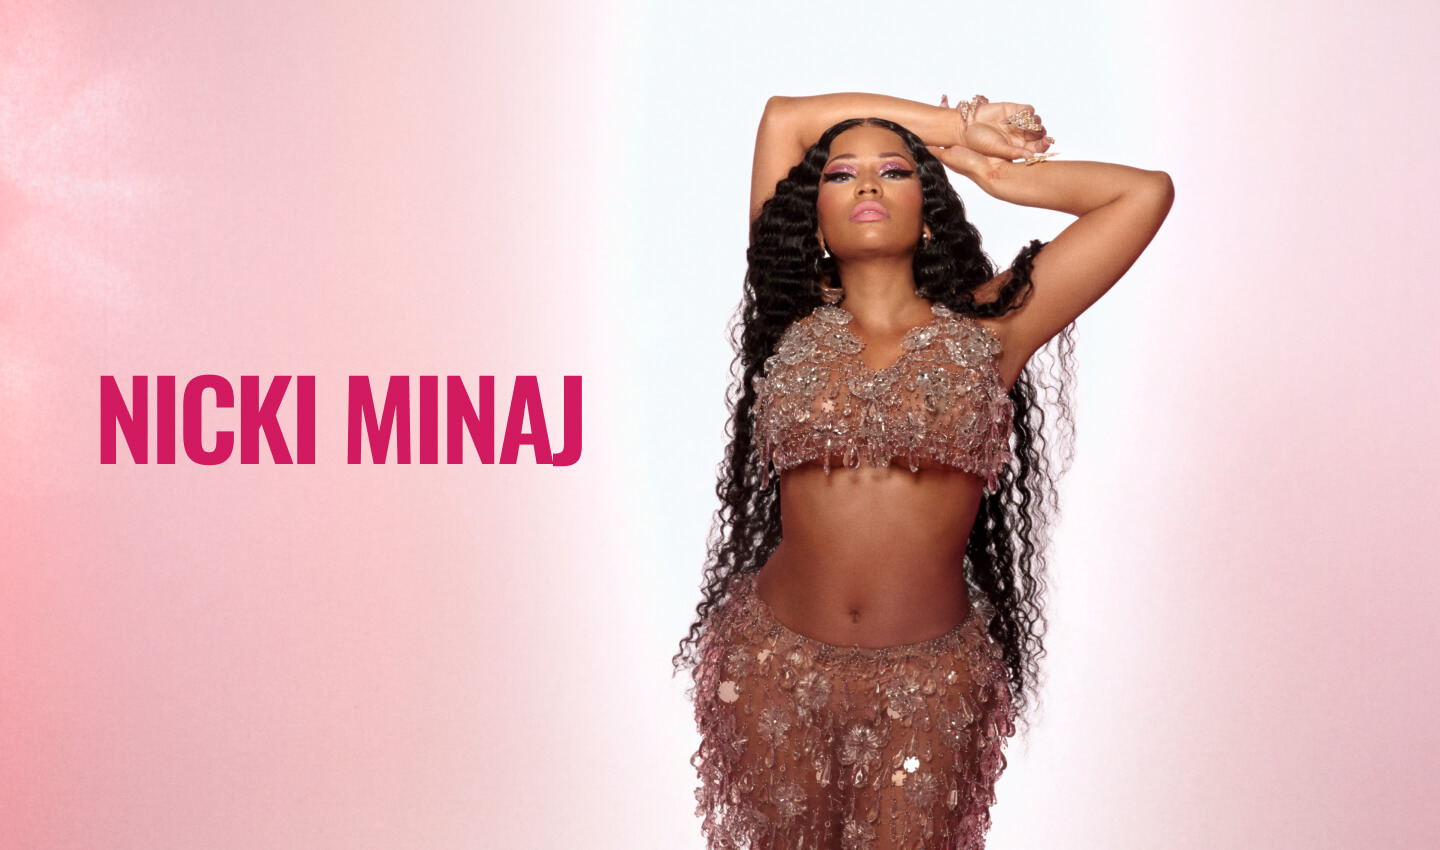 Nicki Minaj: The Iconic Rap Queen